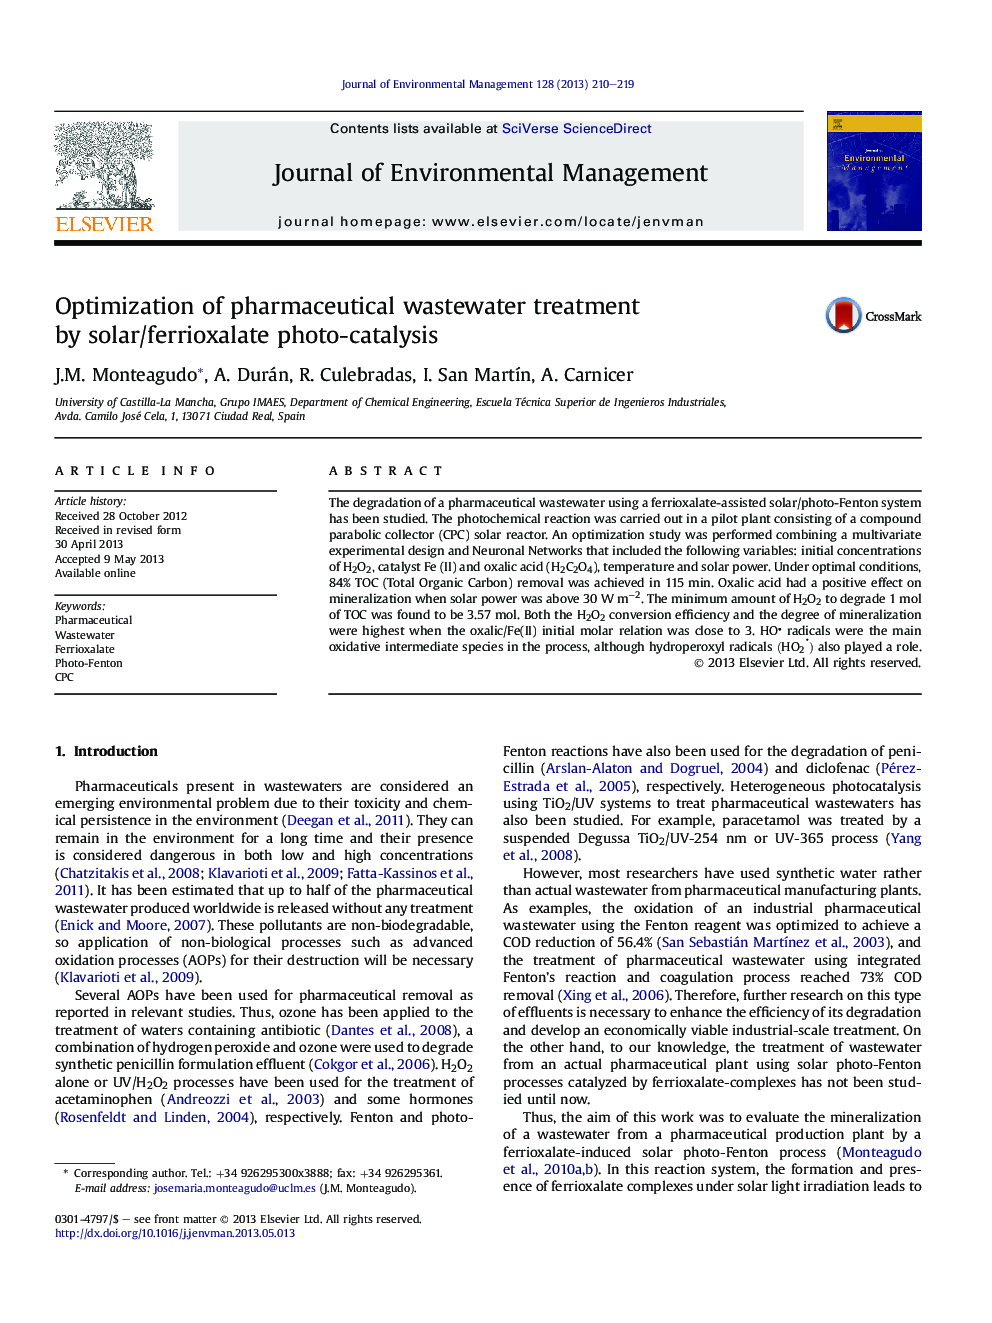 Optimization of pharmaceutical wastewater treatment byÂ solar/ferrioxalate photo-catalysis